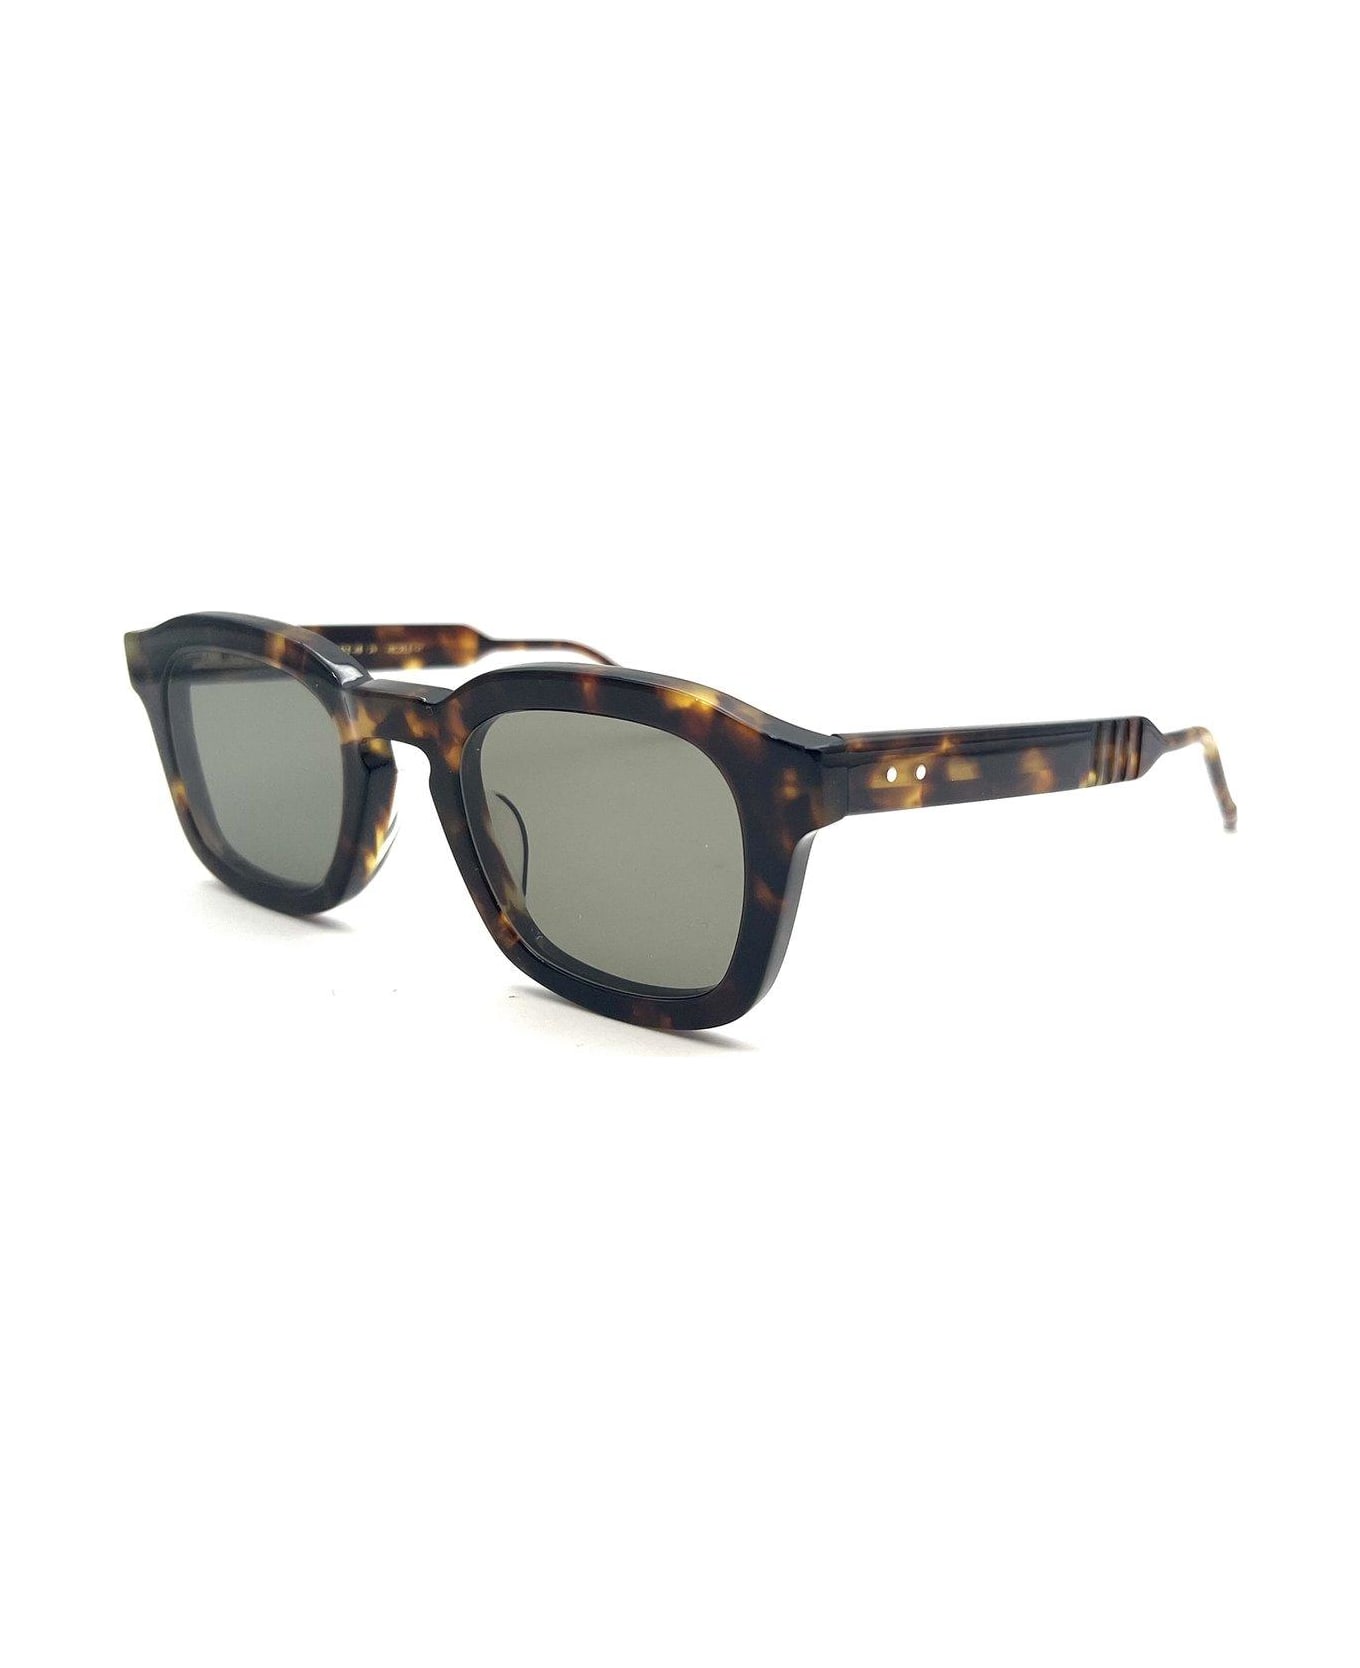 Thom Browne Square Frame Sunglasses